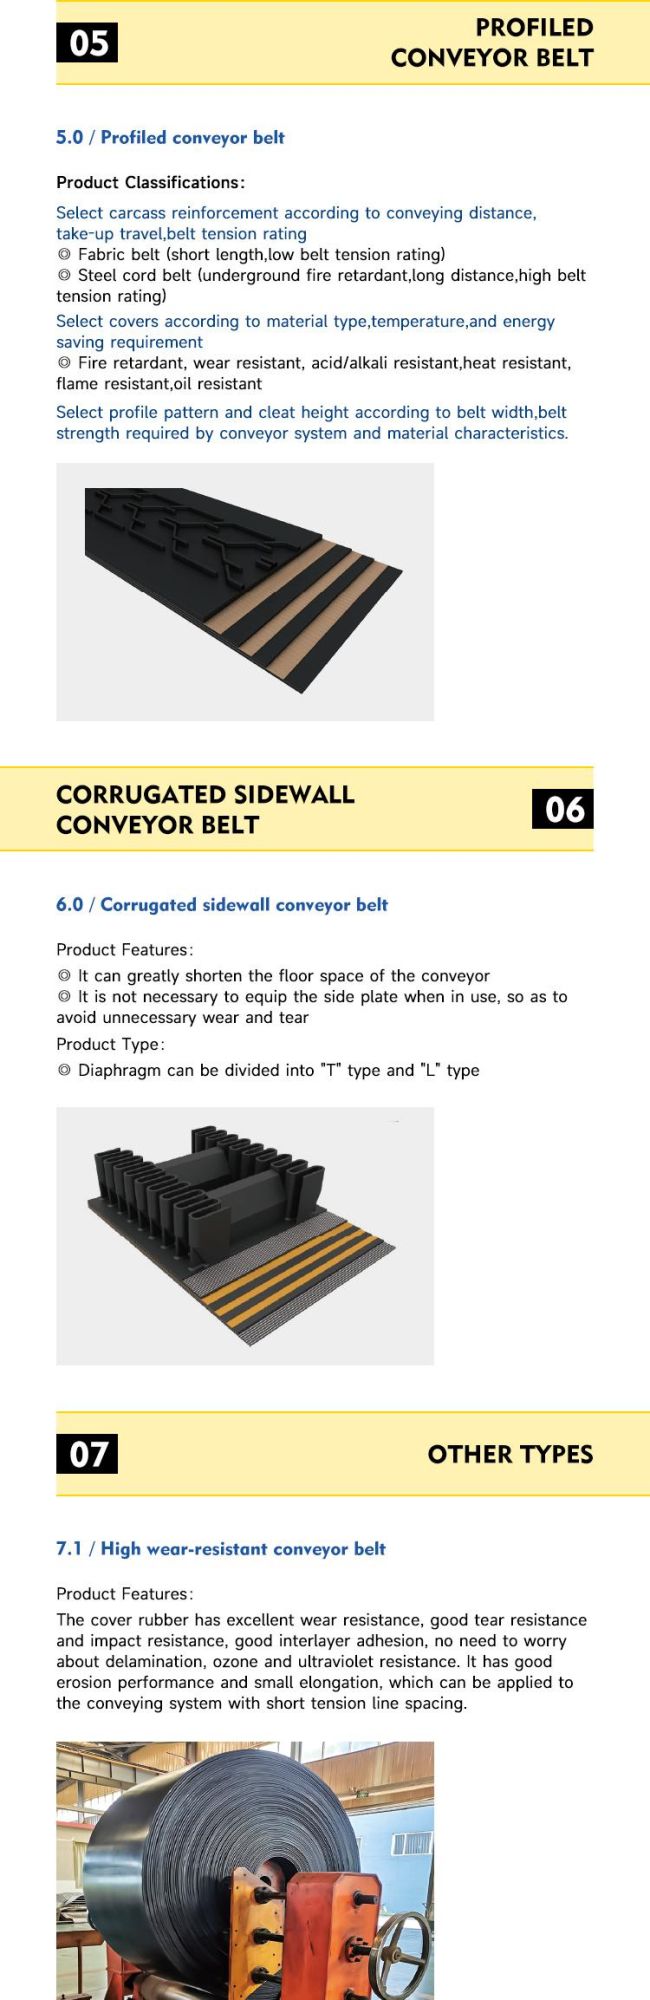 Customized Lower Conveyor System Take-up Travel Anti-Tearing Steel Cord Belt